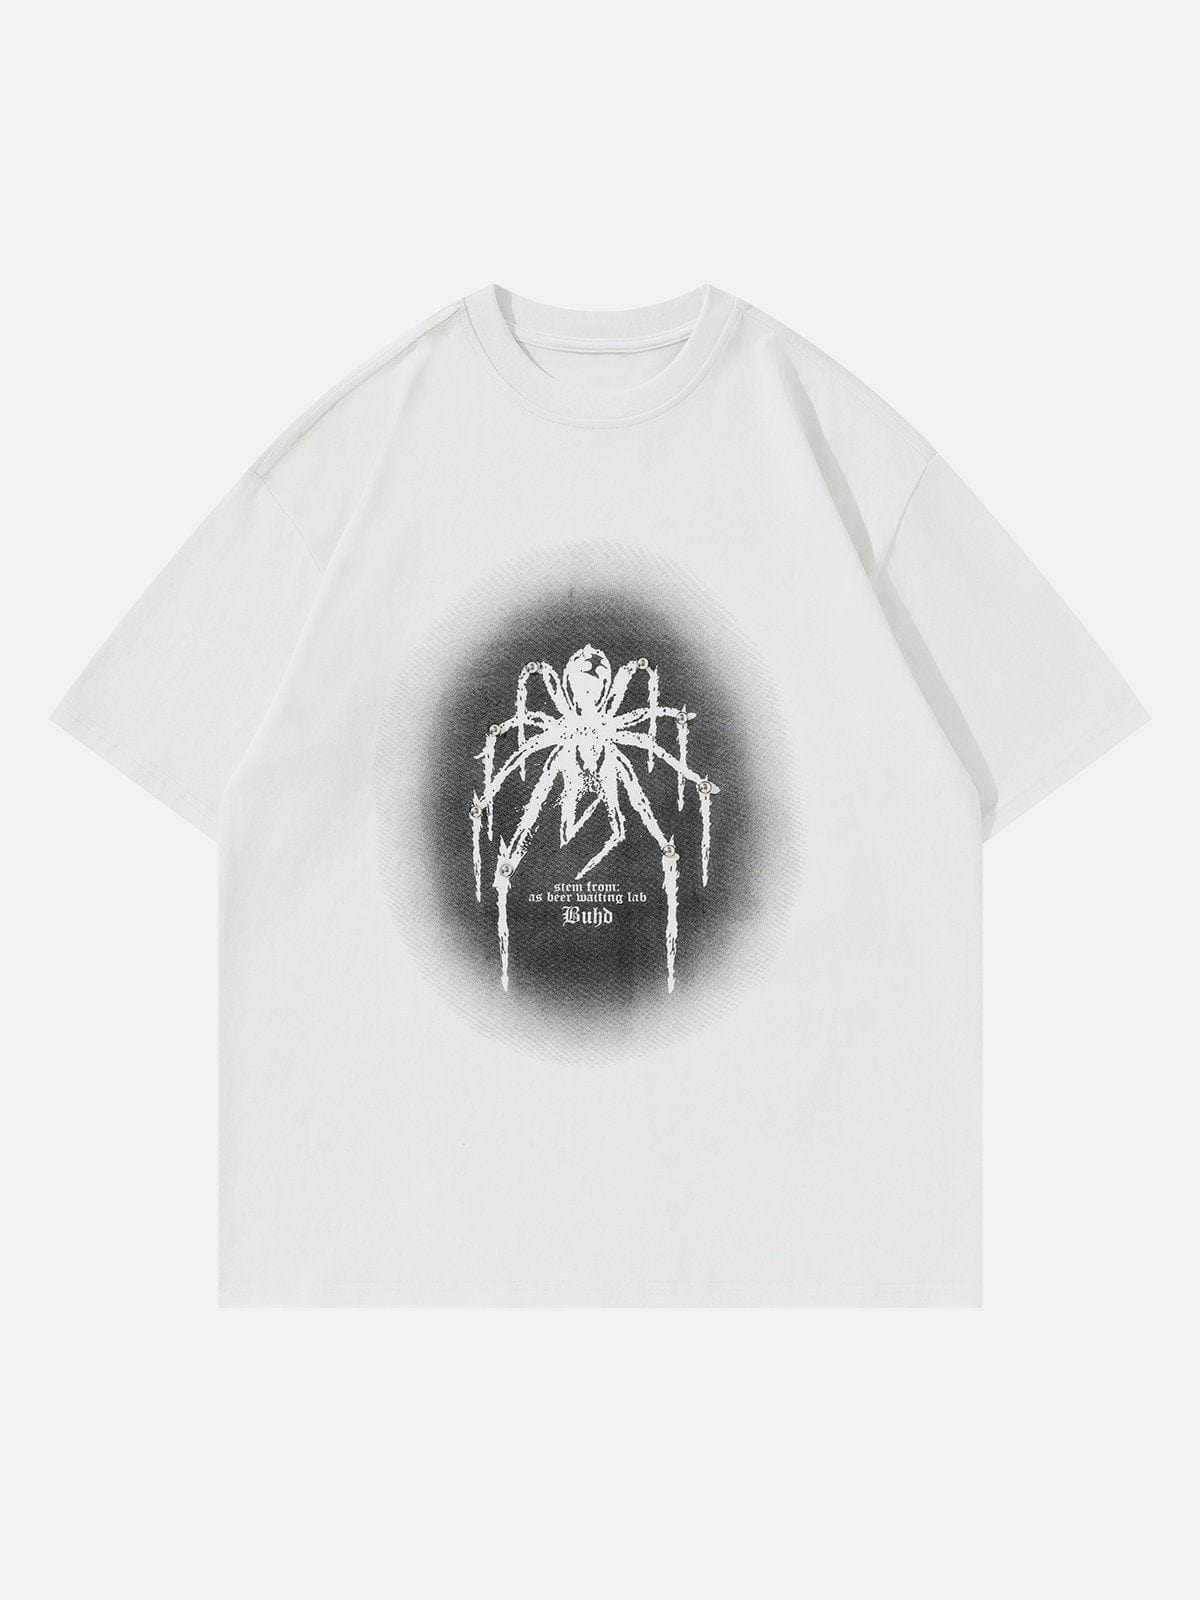 NEV Studded Spider Print Tee